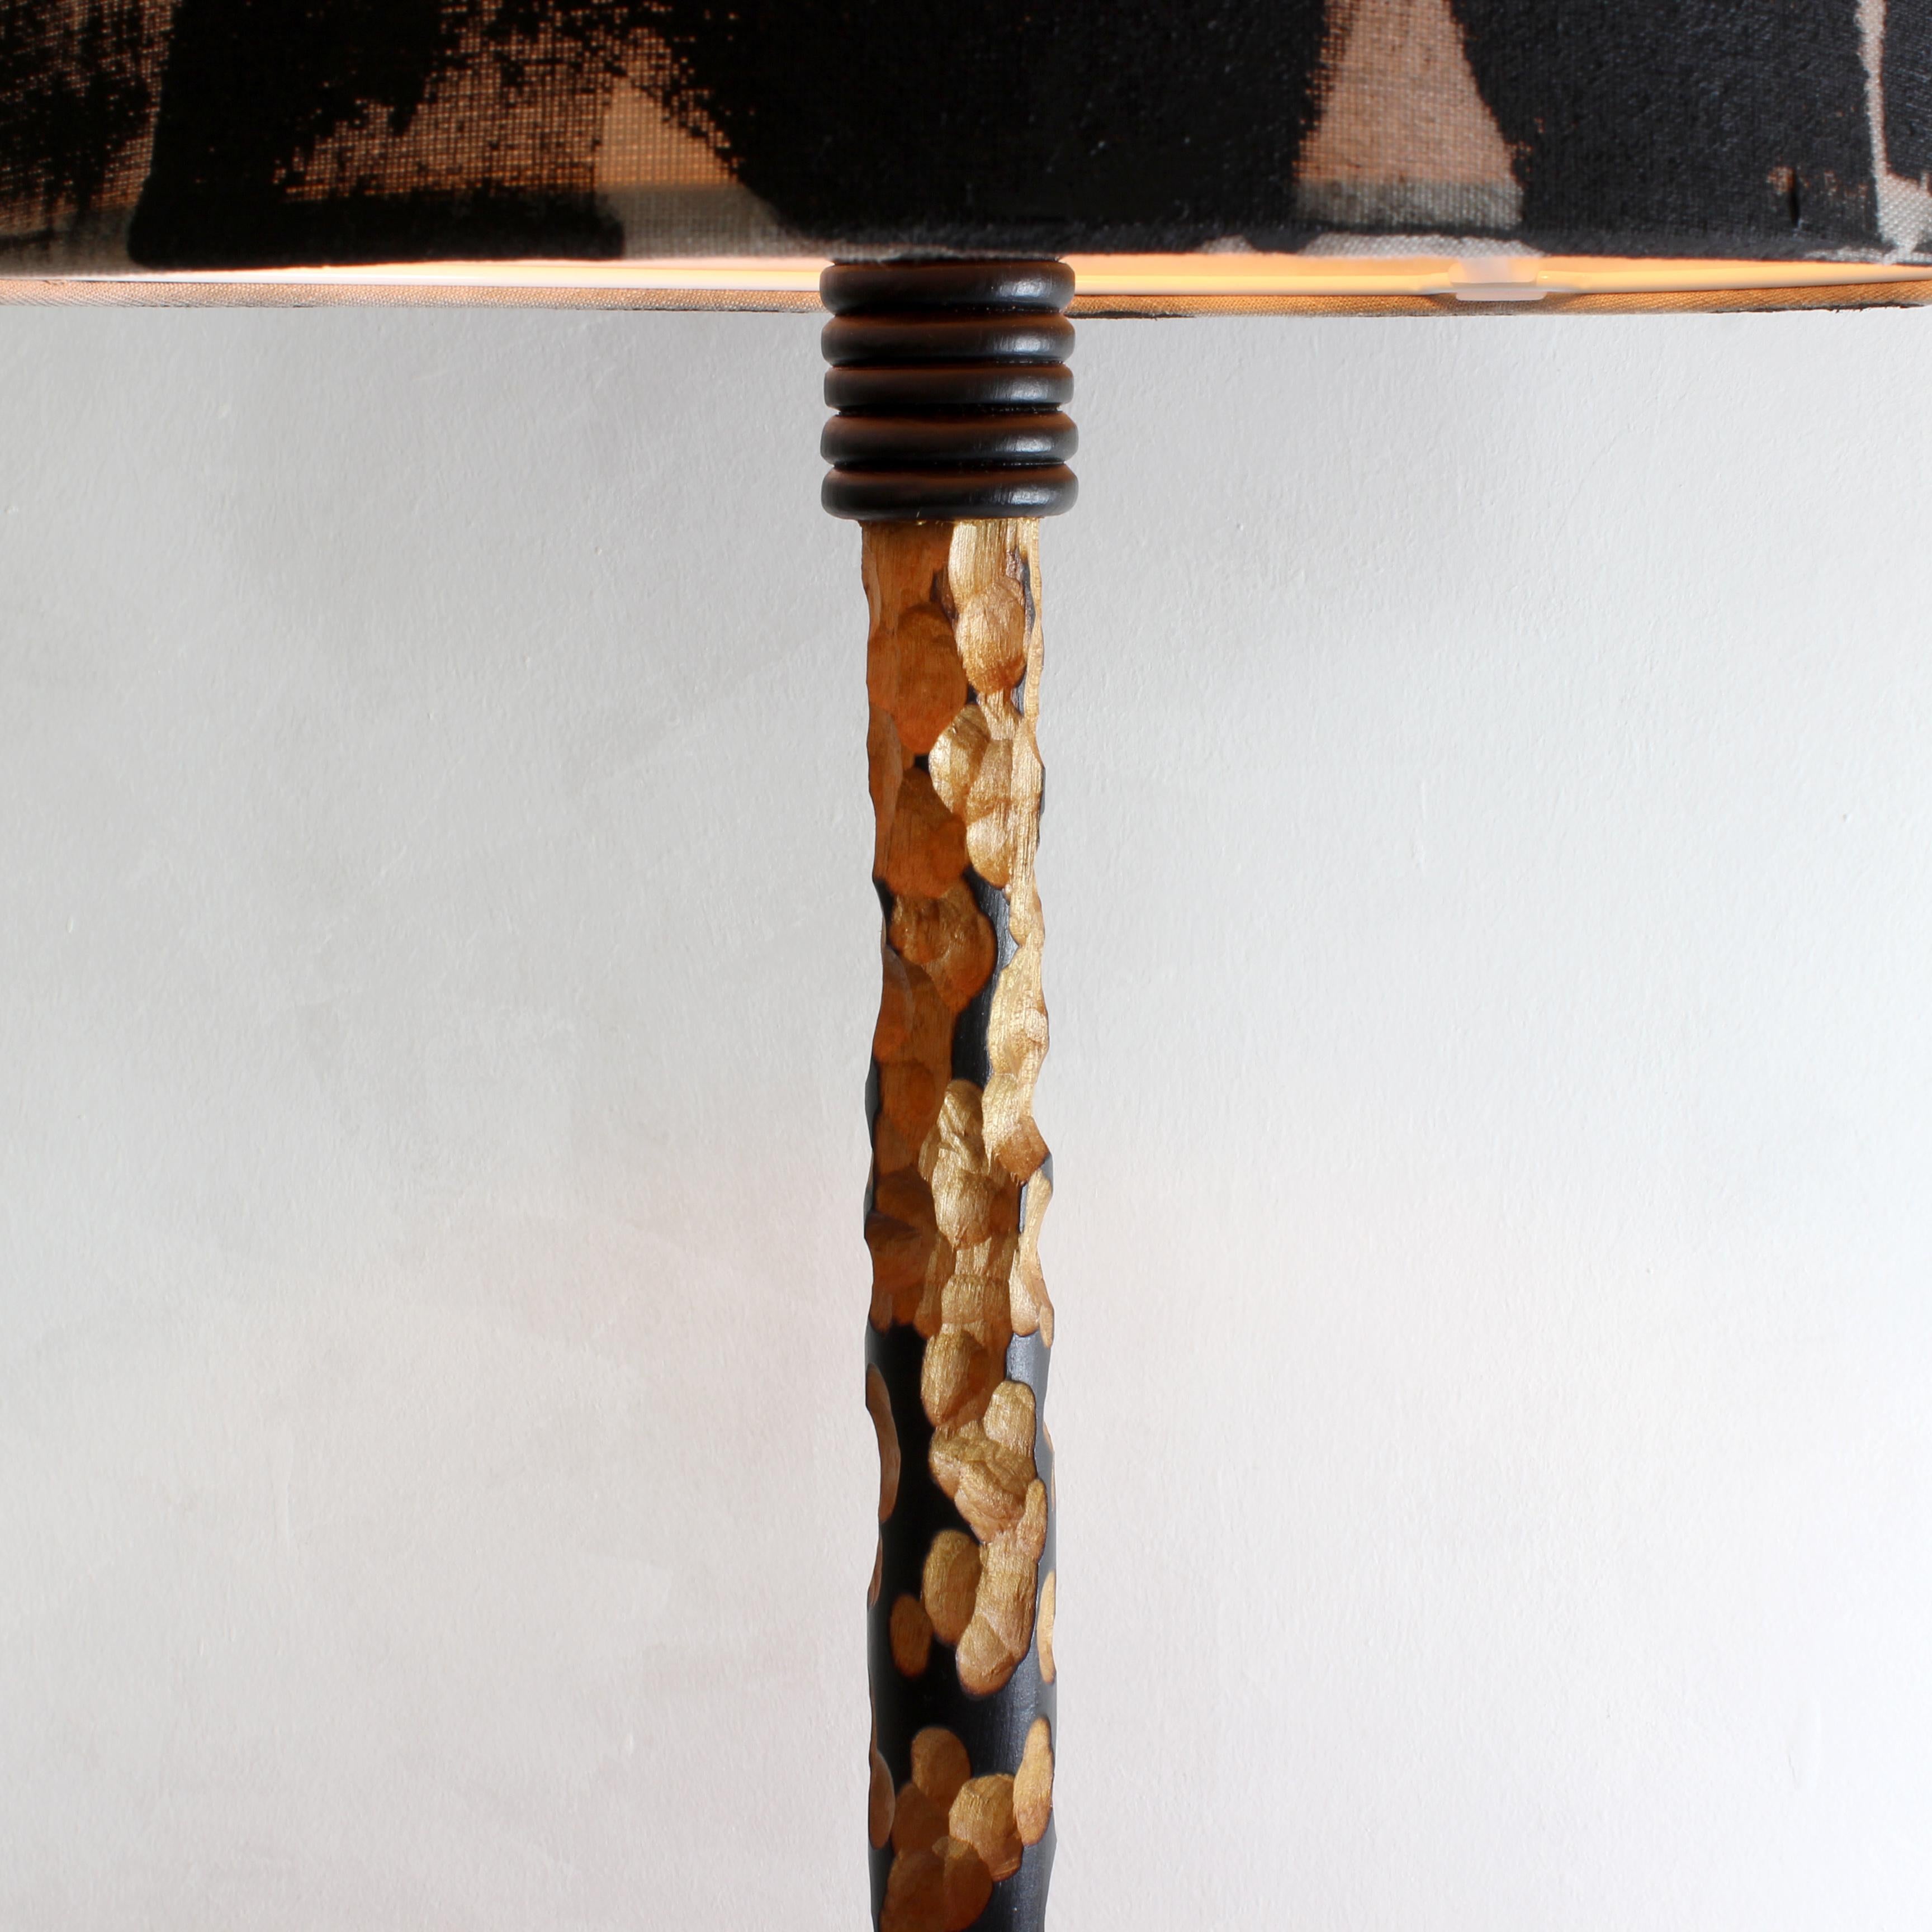 Hand-Carved Rocket, Unique Sculptural Lighting, Floor Lamp from Reclaimed Burned Wood For Sale